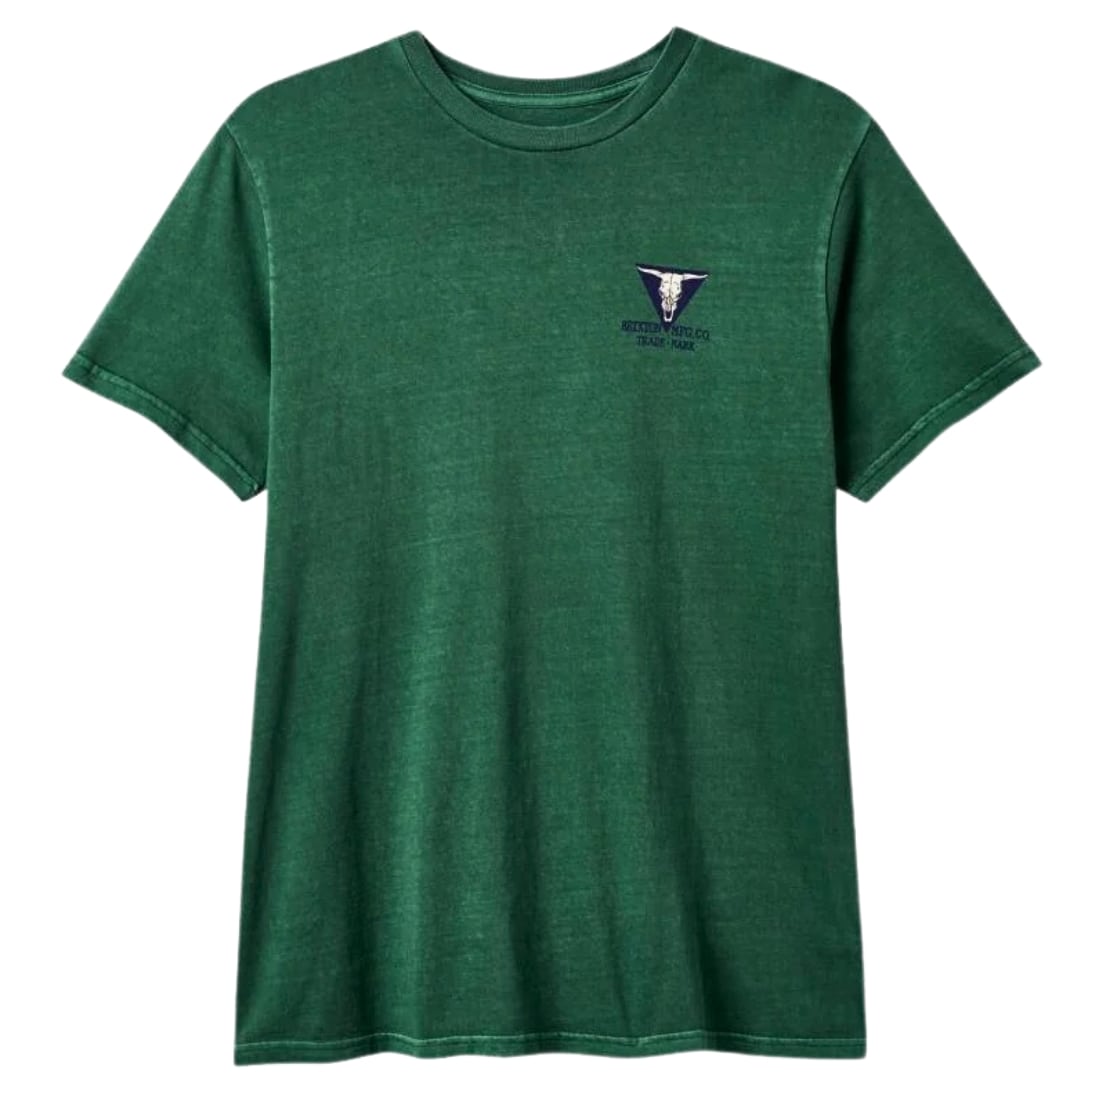 Brixton Galveston T-Shirt - Pine Needle Worn Wash - Mens Graphic T-Shirt by Brixton